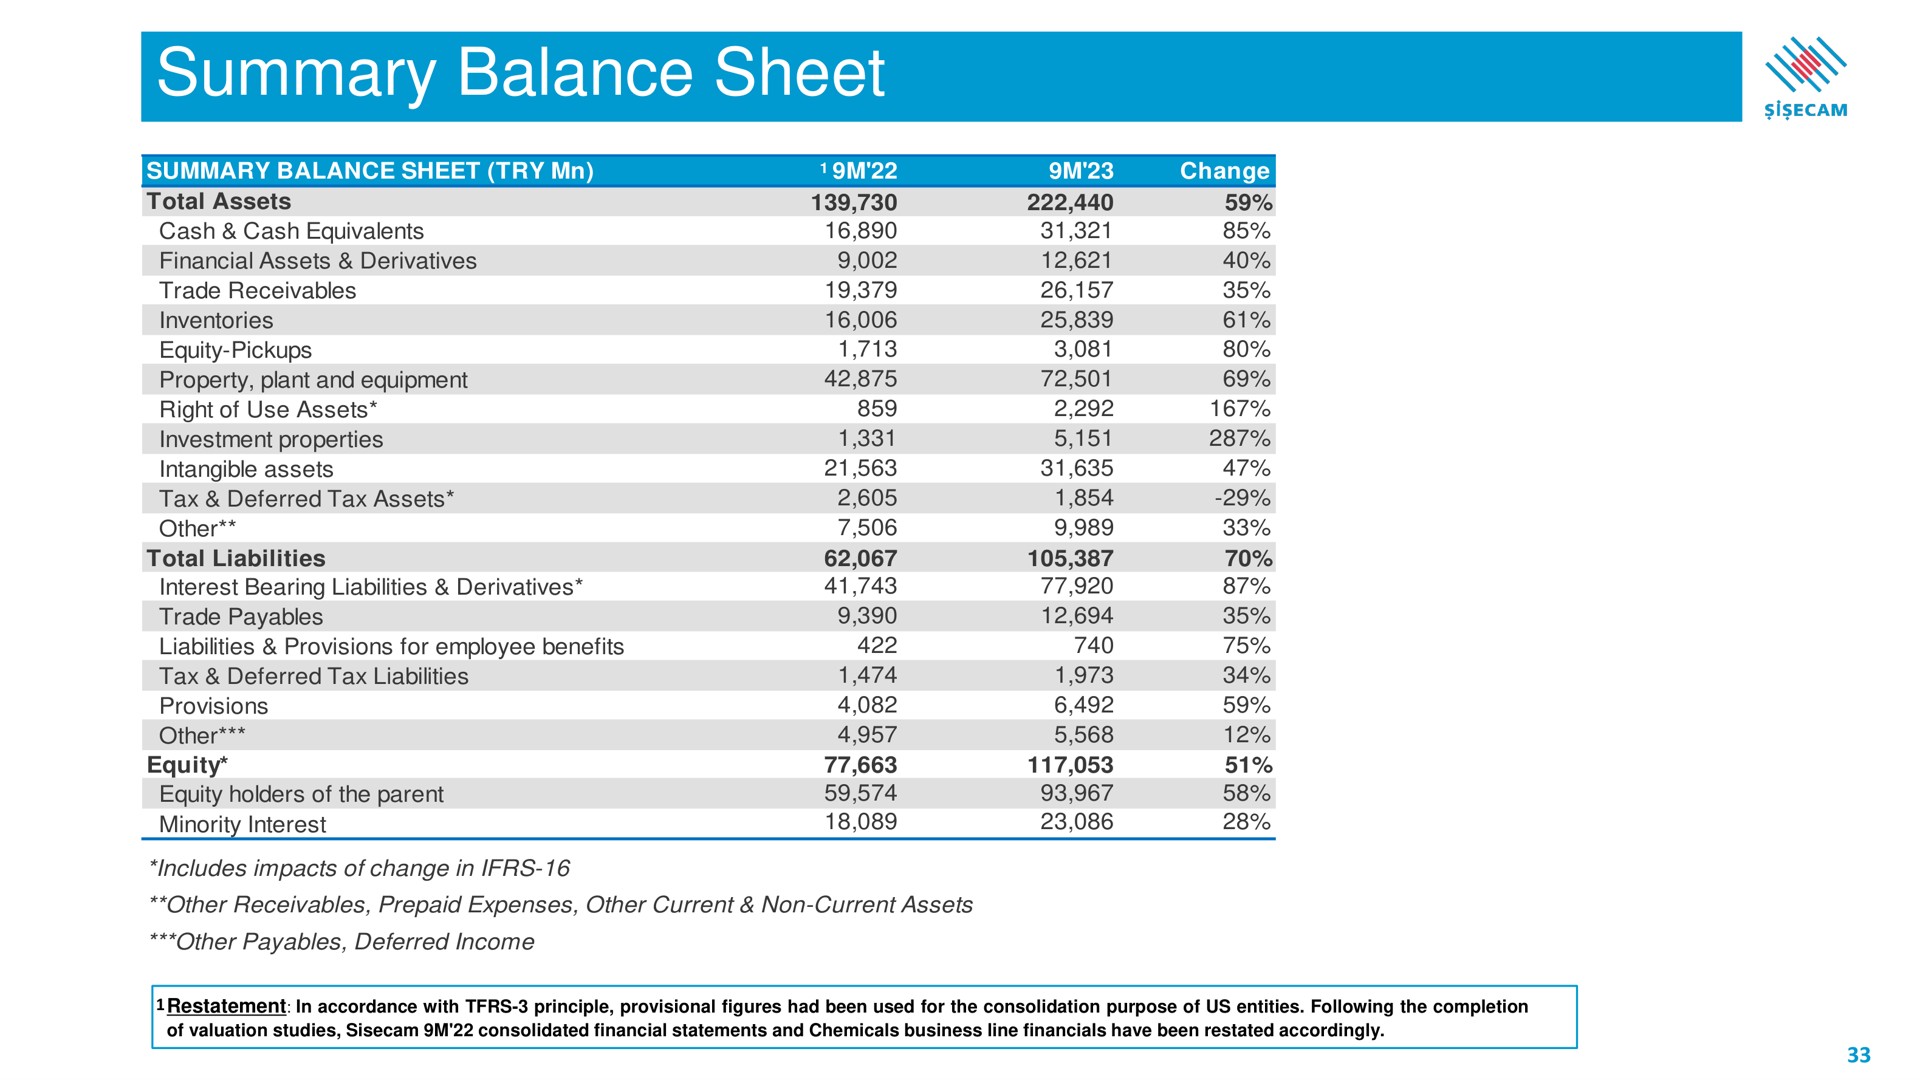 summary balance sheet | Sisecam Resources